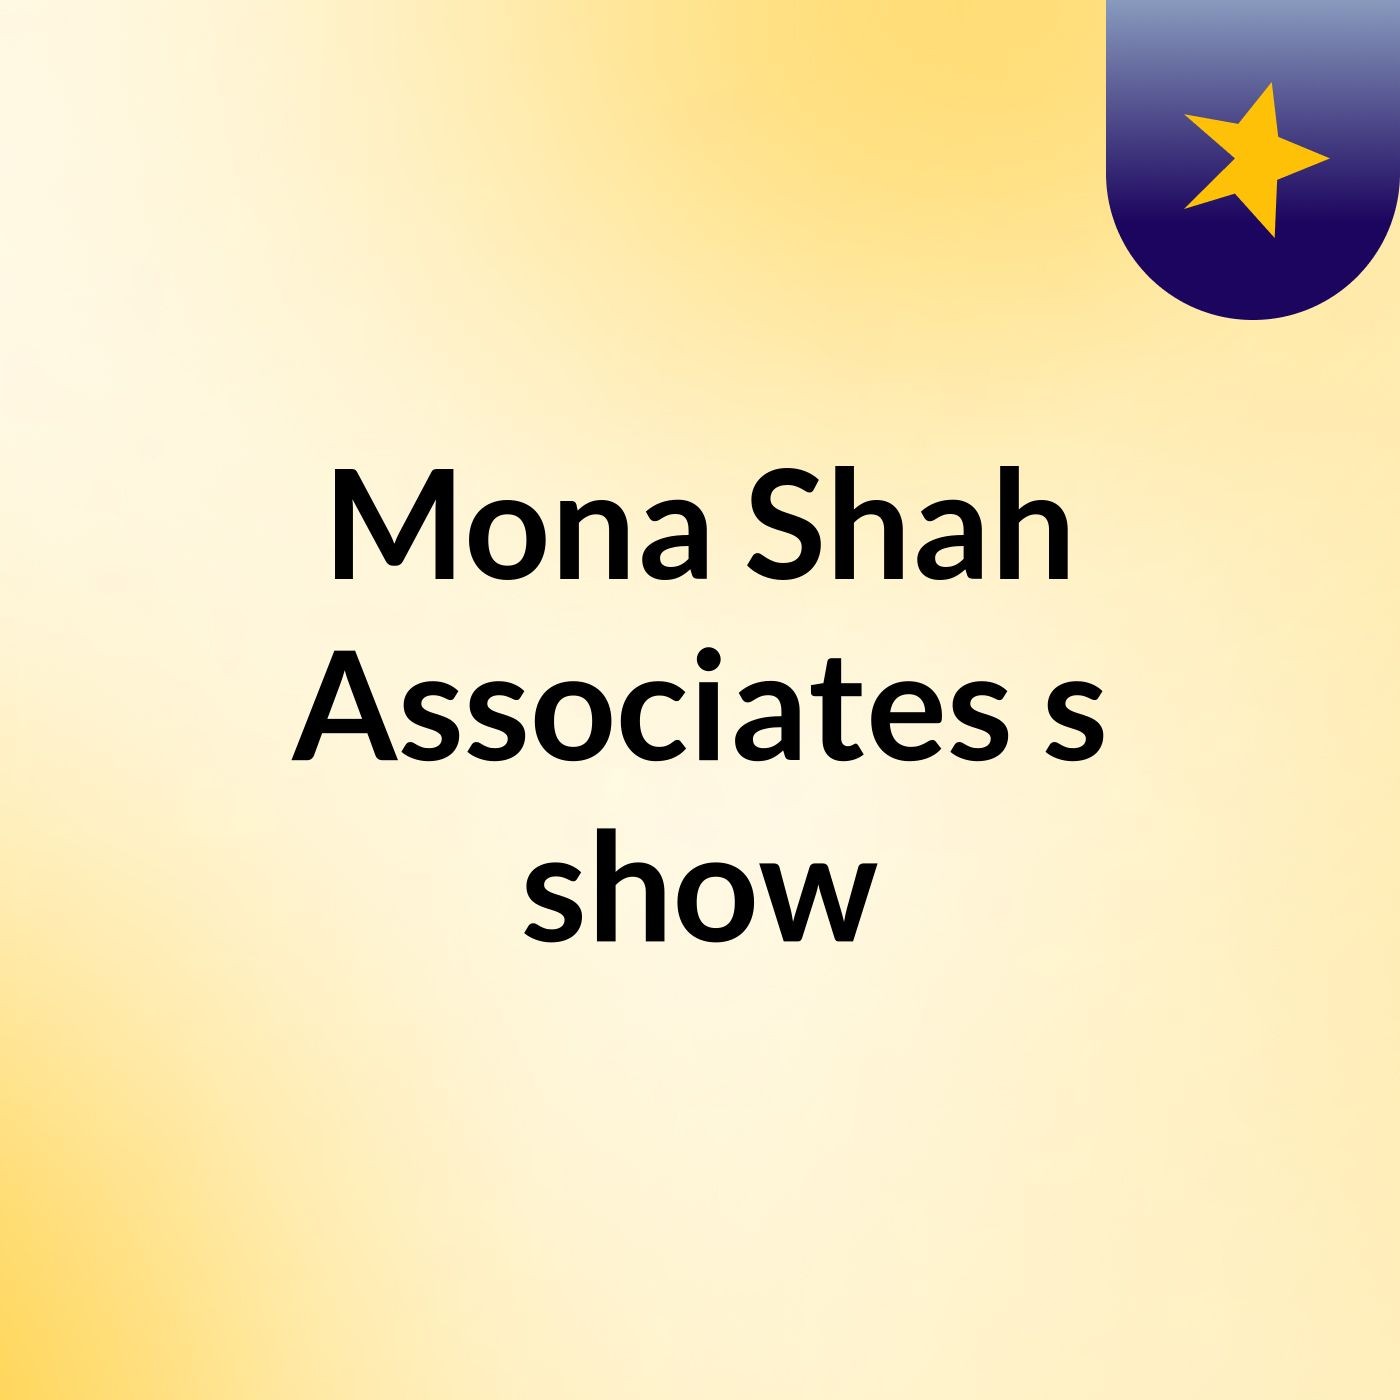 Mona Shah & Associates's show